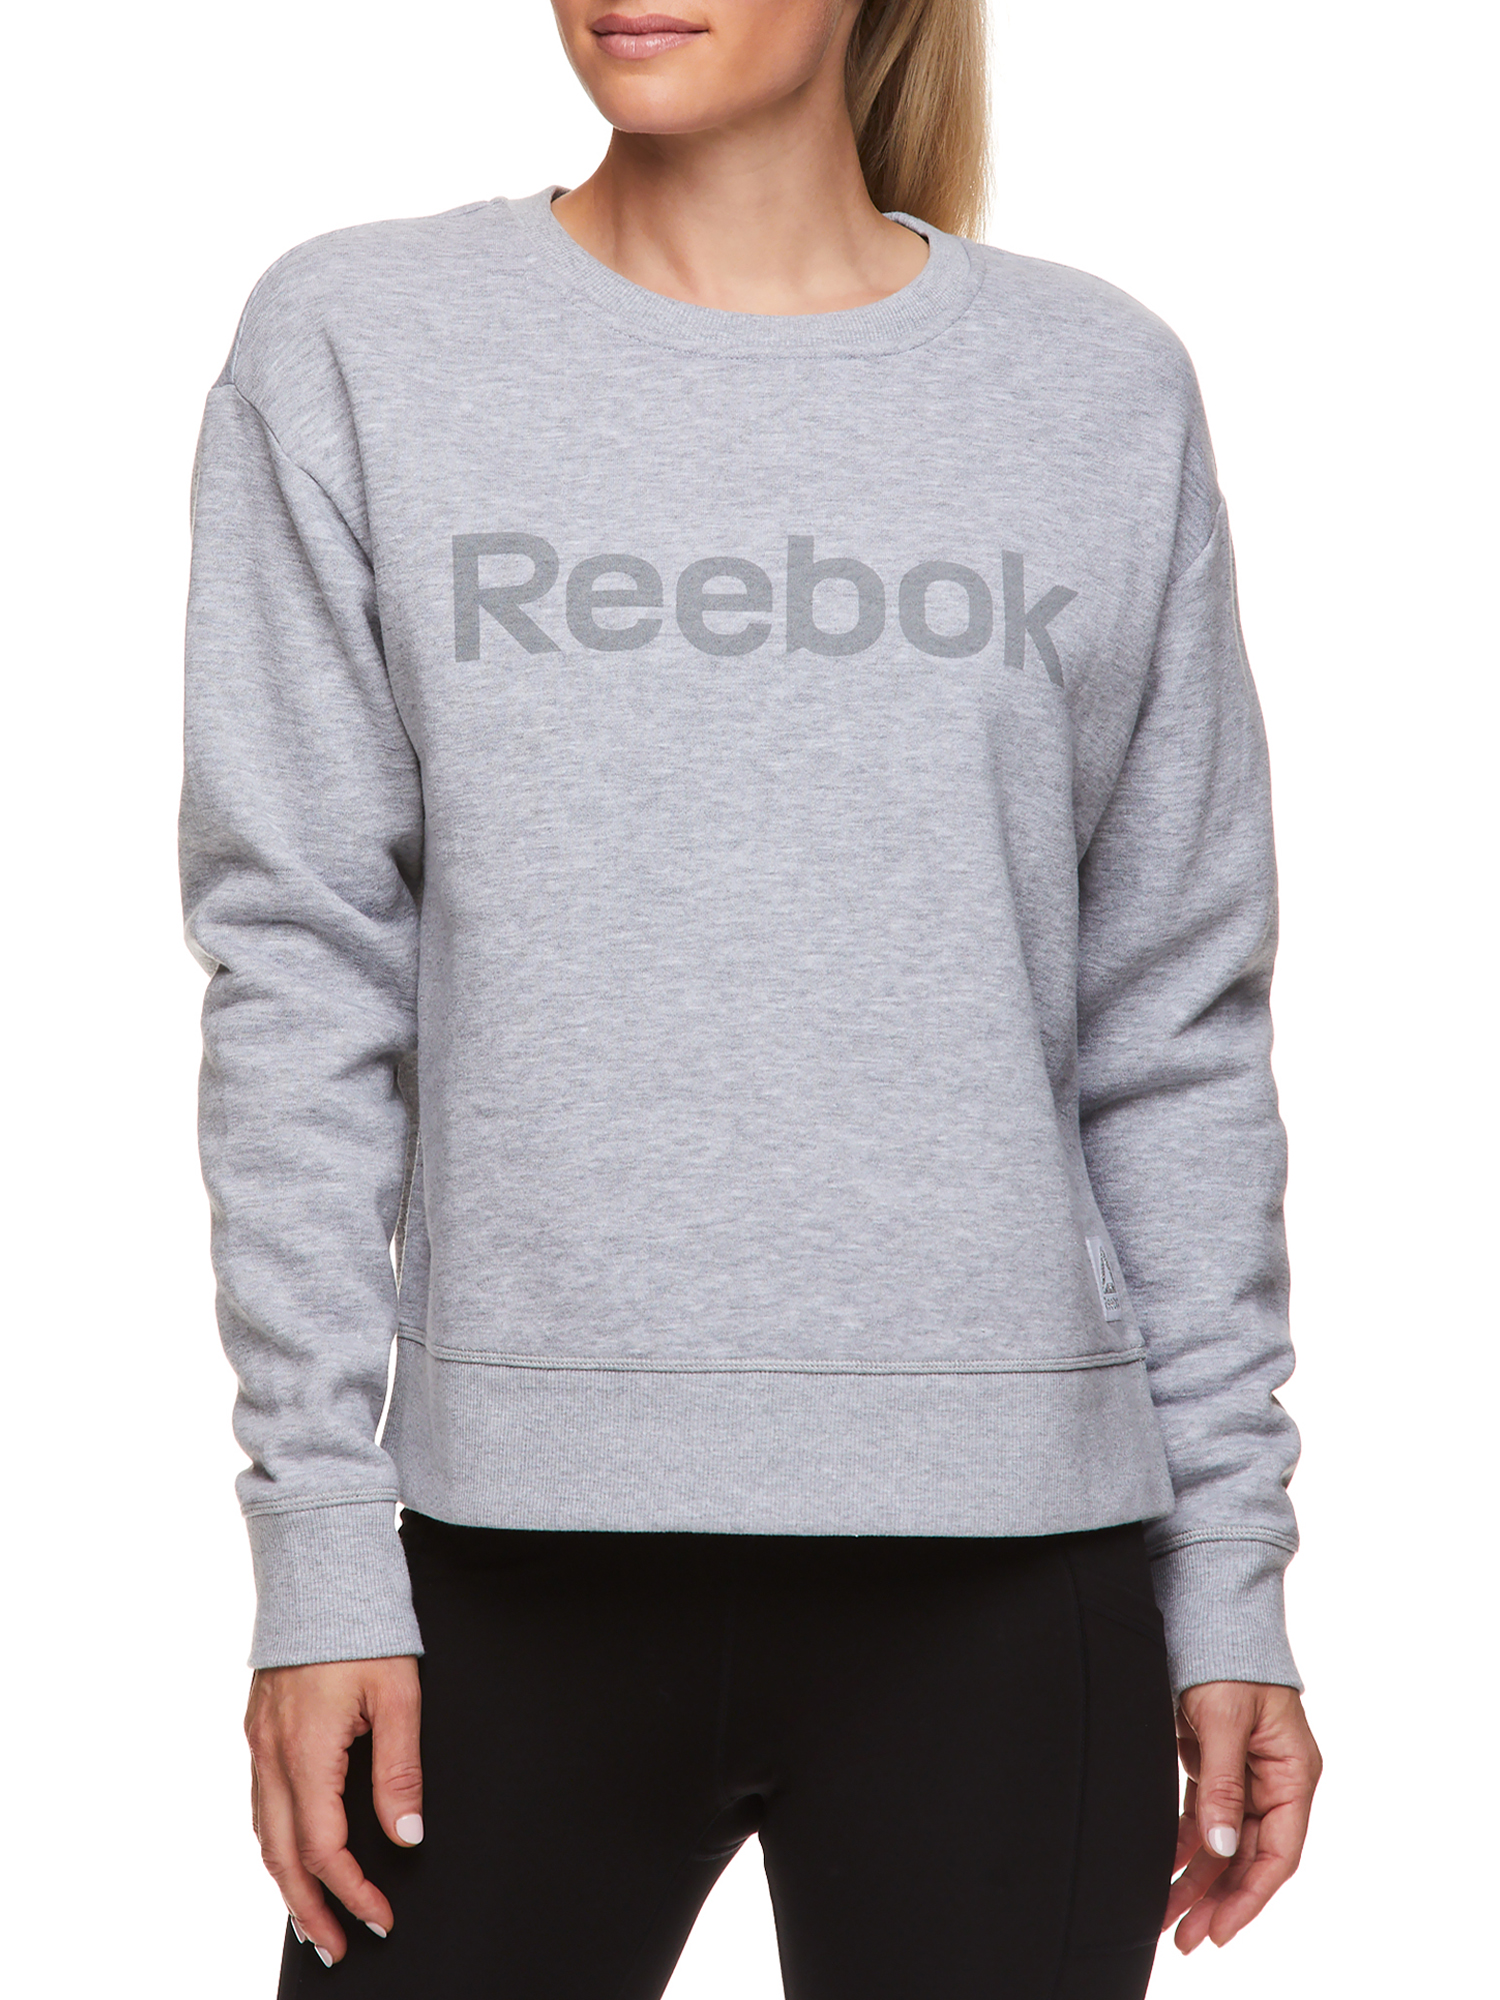 Reebok Womens Cozy Crewneck Sweatshirt with Graphic - image 1 of 4